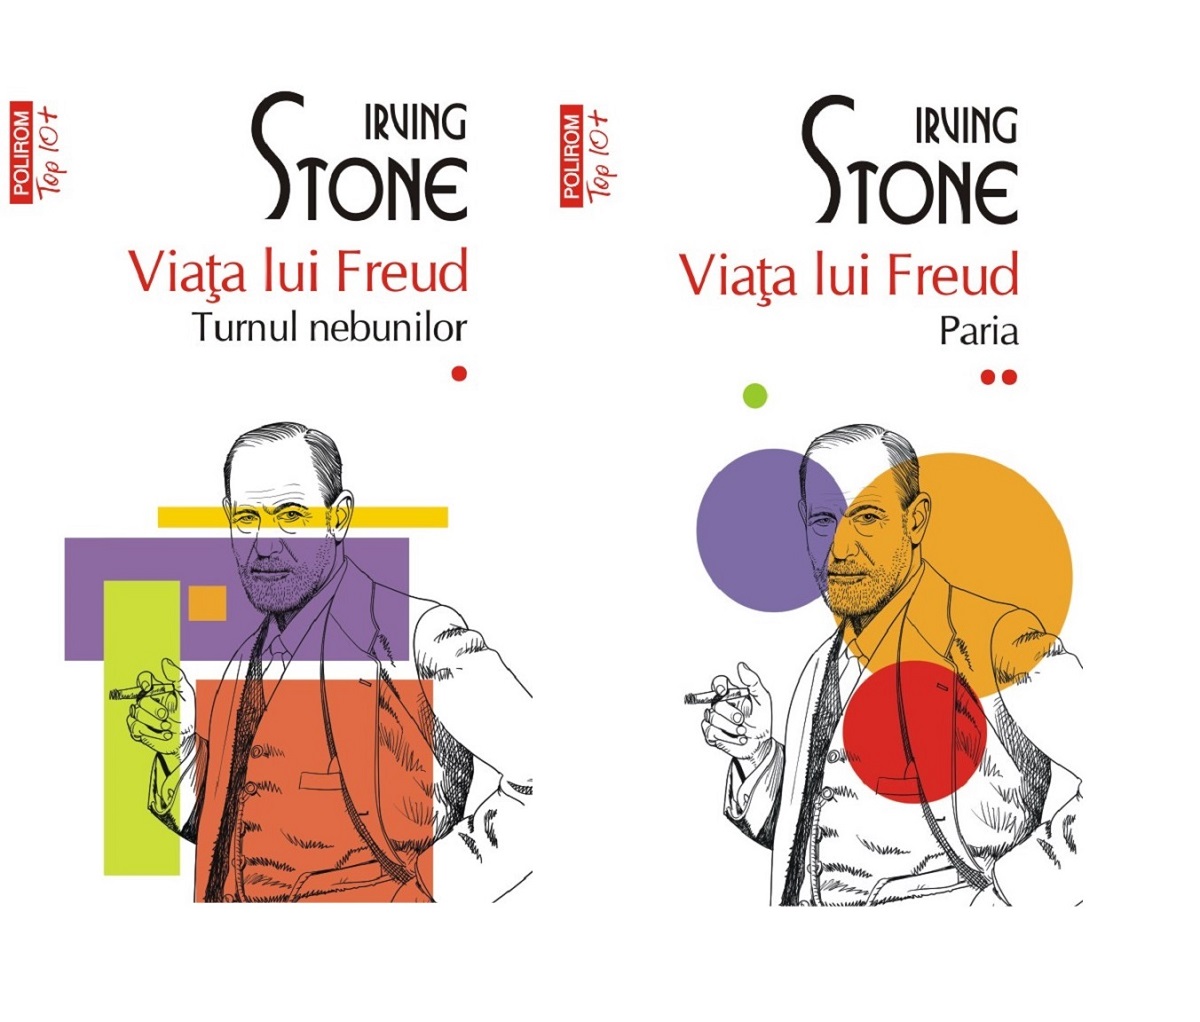 Viata lui Freud Vol.1+2 - Irving Stone